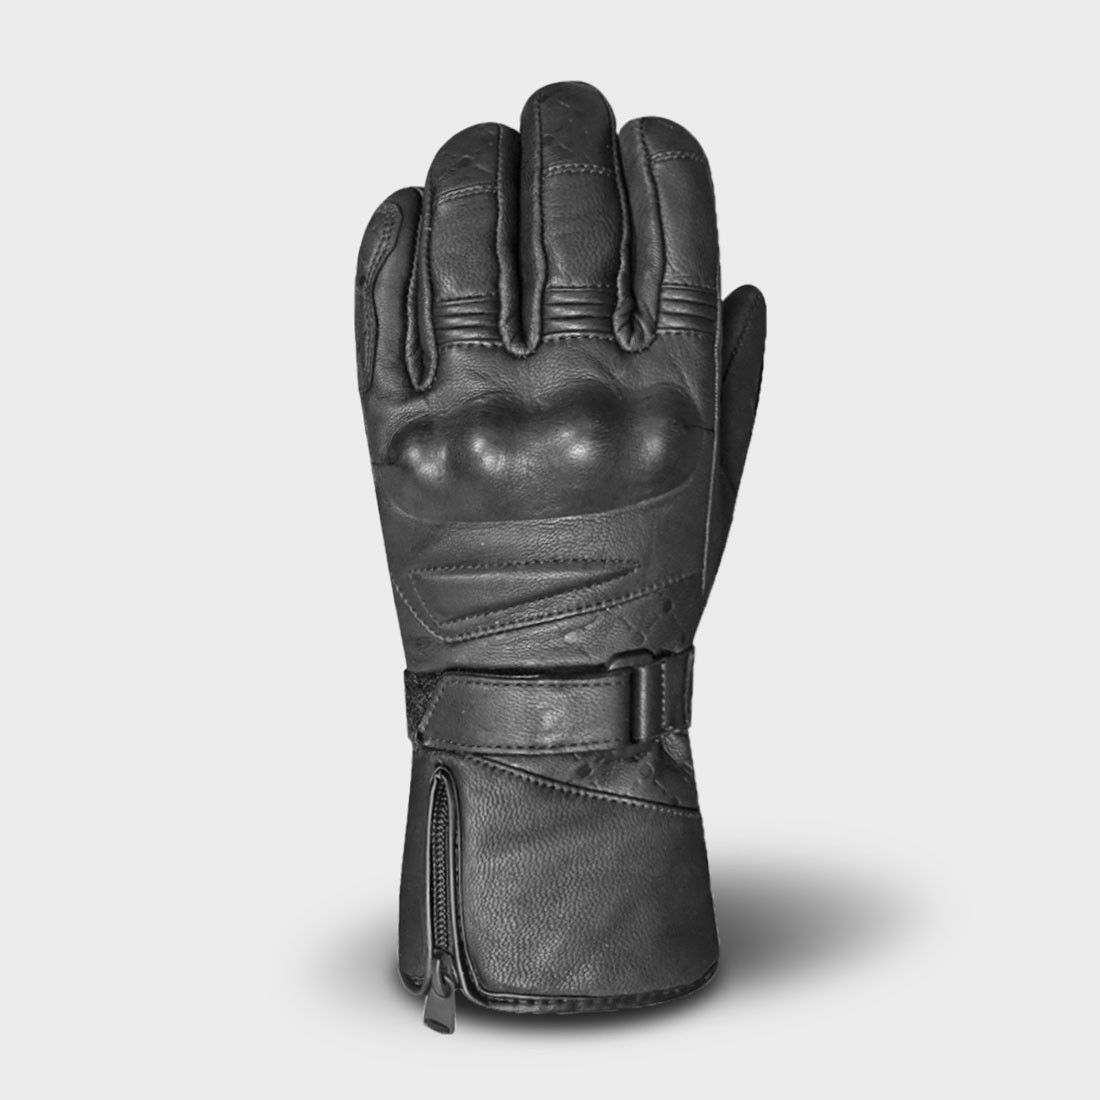 98359 17em Harley Davidson Urban Leather Gloves Ec Black At Thunderbike Shop